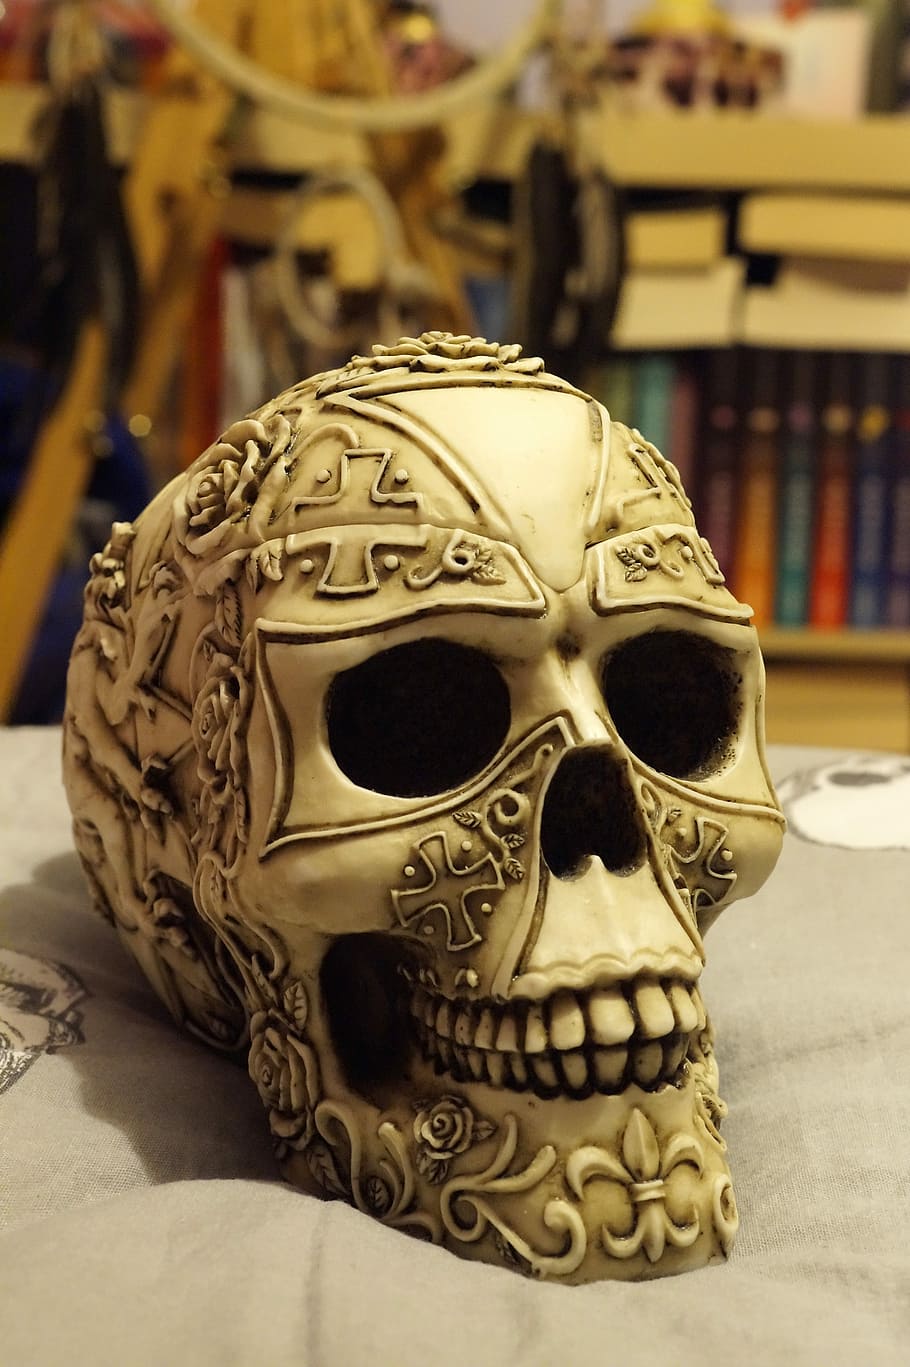 Skull, Death, Head, Deco, Bones, Crafts, mask - disguise, human skeleton, indoors, cultures